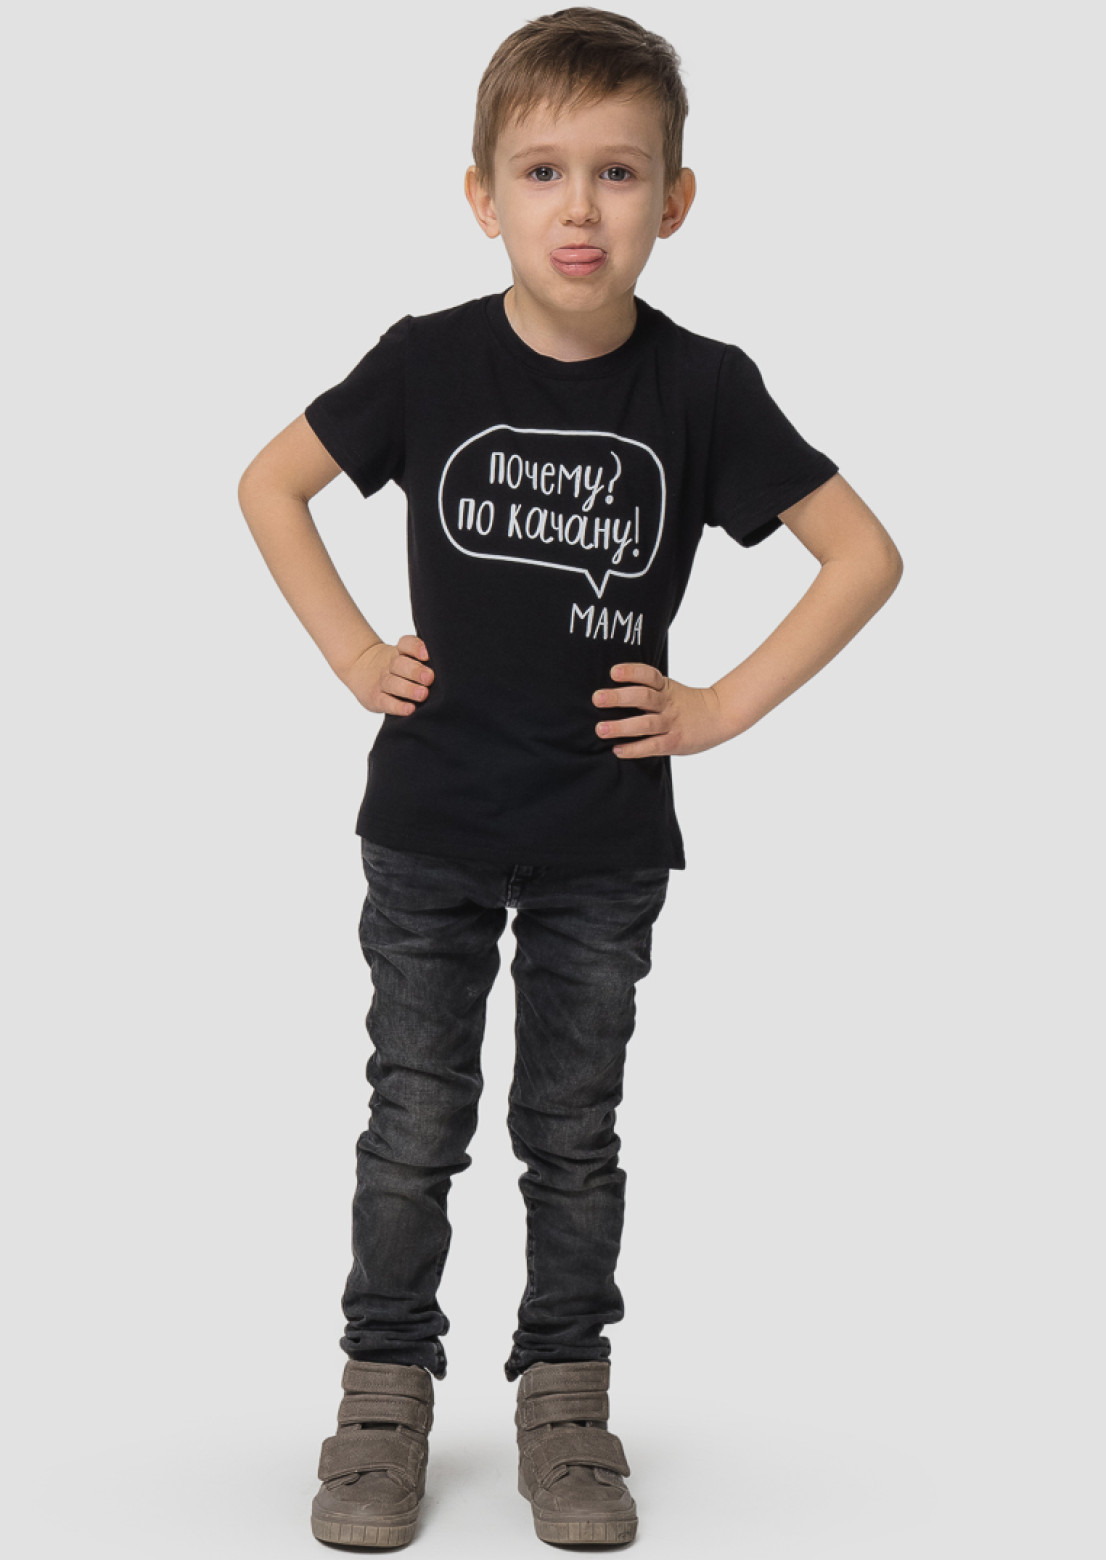 Black kids t-shirt "Почему? По качану! Мама"